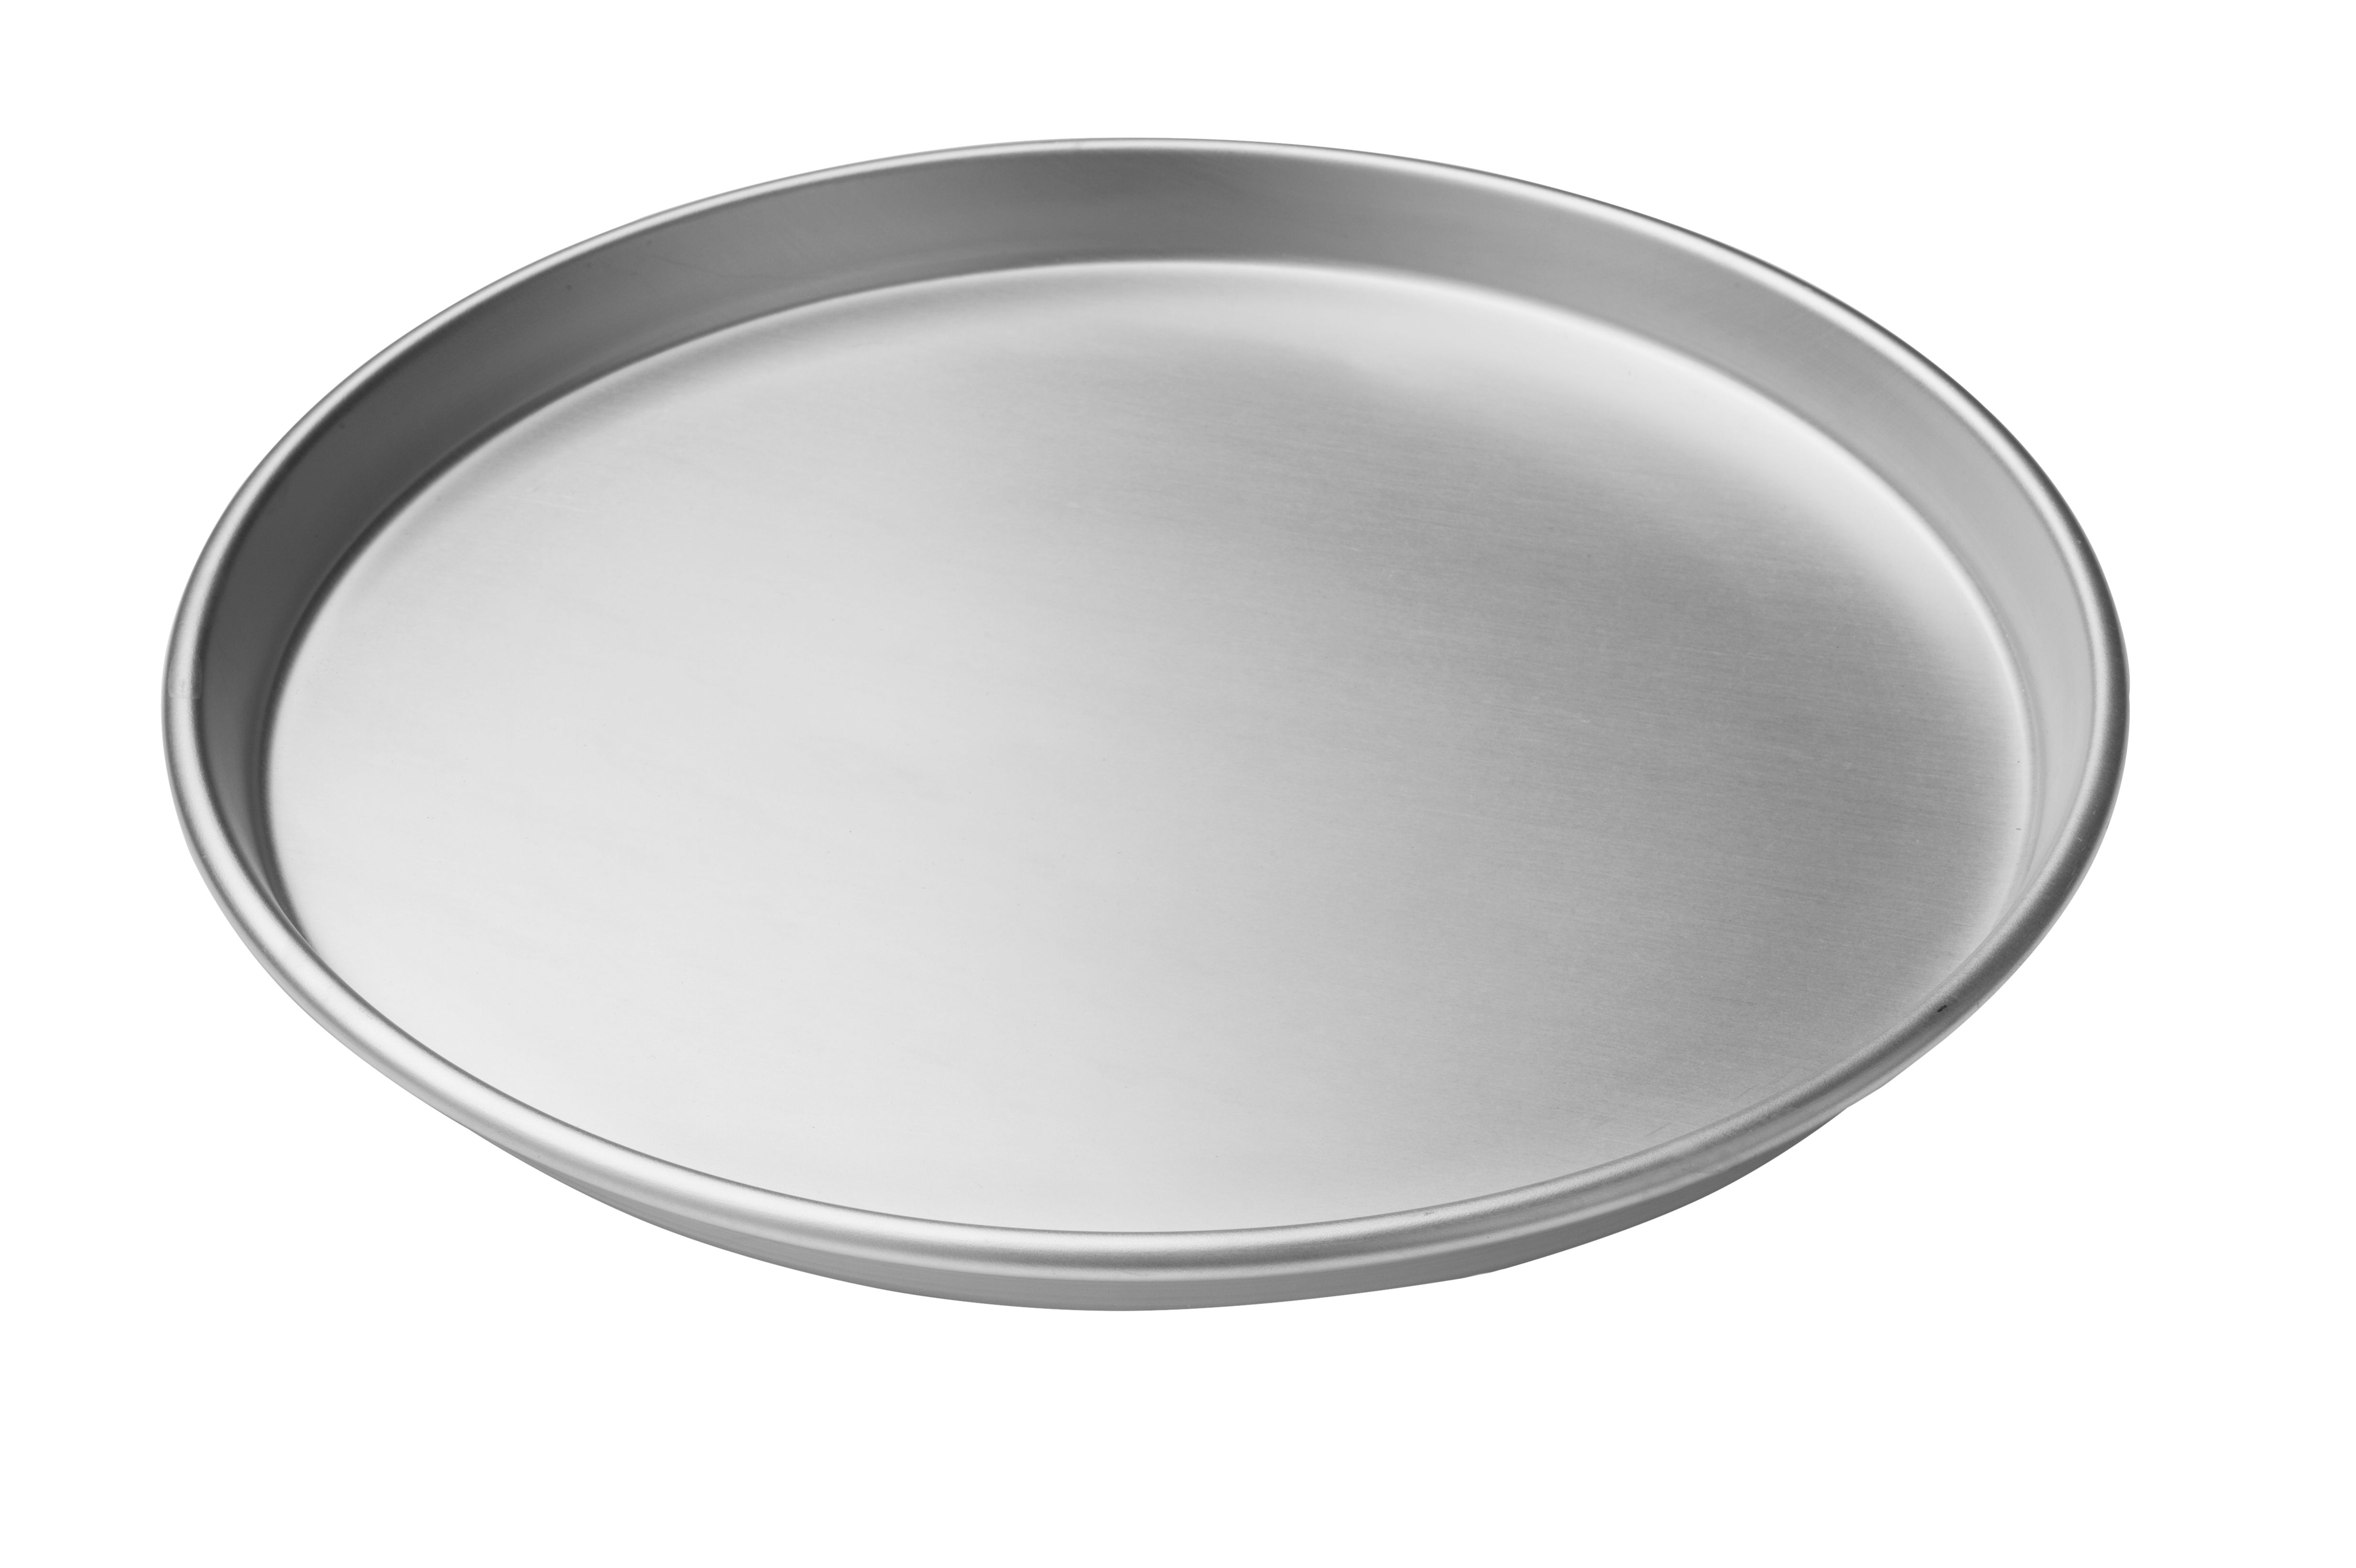 Pizzablech  Aluminium  rund  Durchmesser 40 cm  H 3 cm